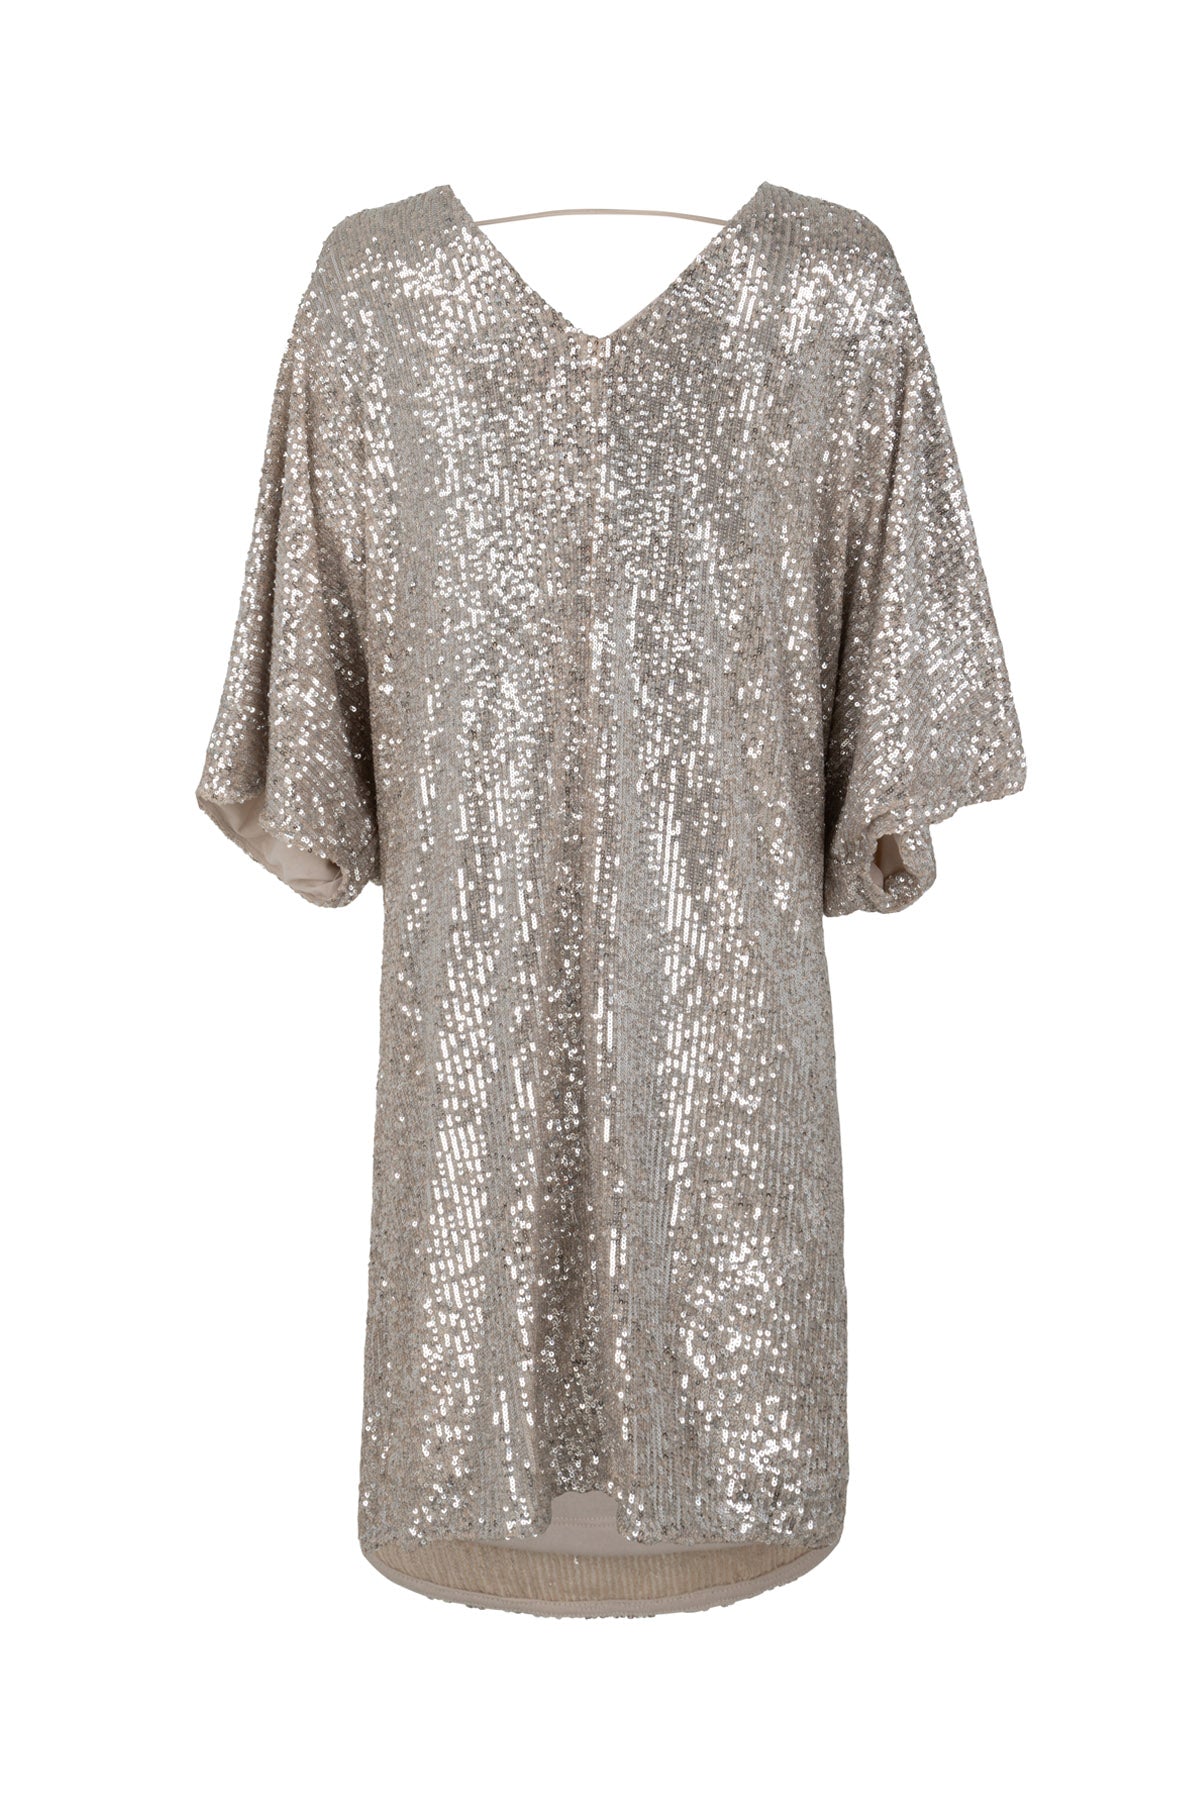 CRAS Hannah Dress Dress 1501 Cream Silver